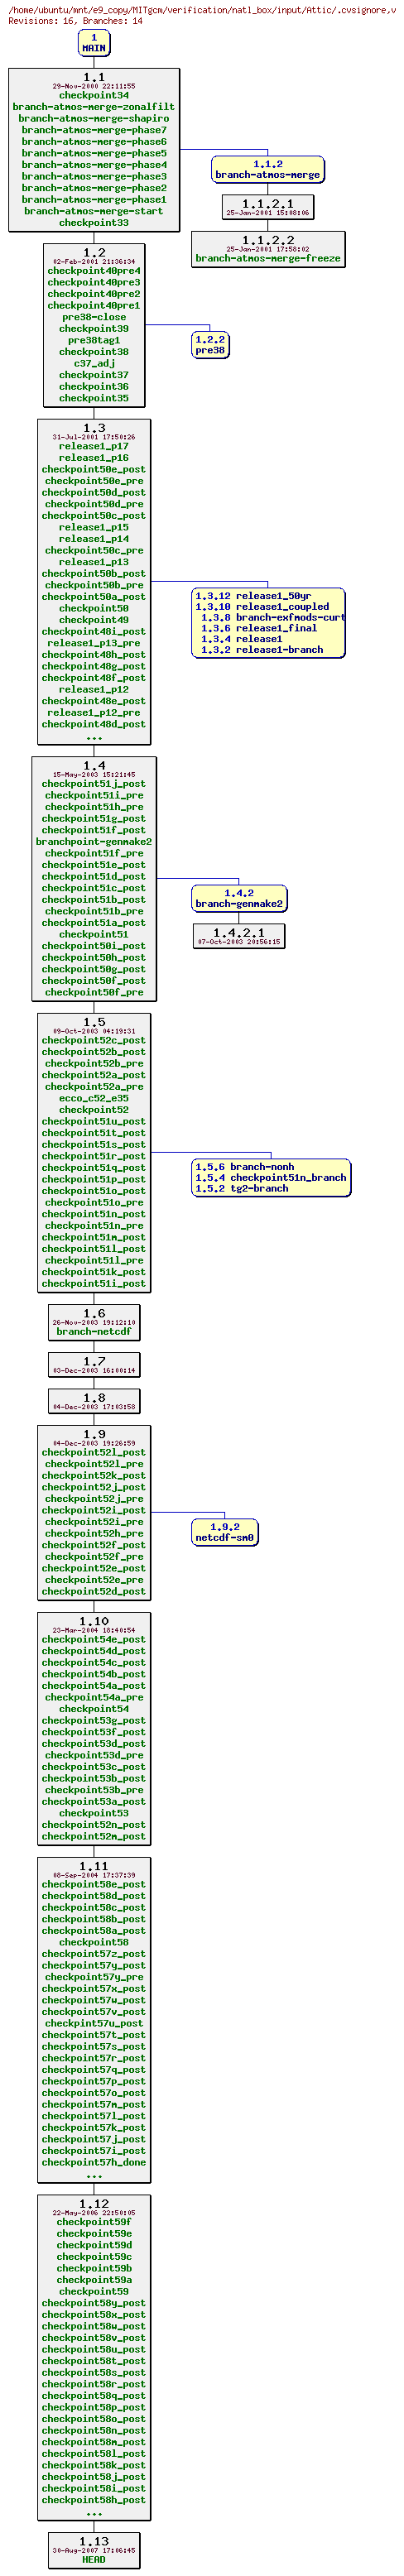 Revisions of MITgcm/verification/natl_box/input/.cvsignore